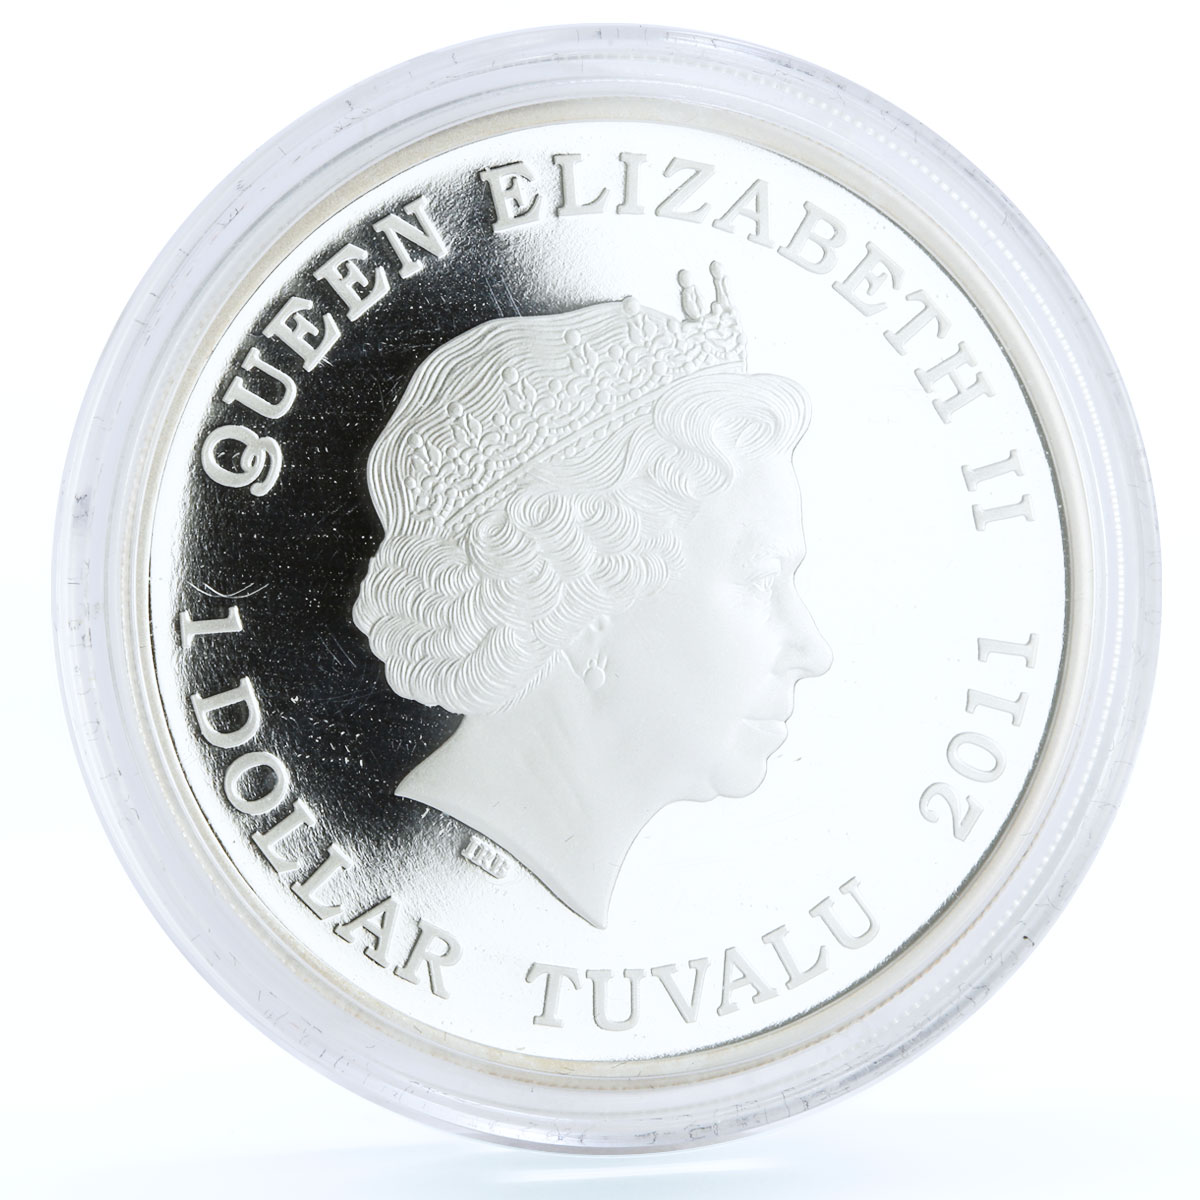 Tuvalu 1 dollar Endangered Wildlife Orangutan Fauna colored silver coin 2011